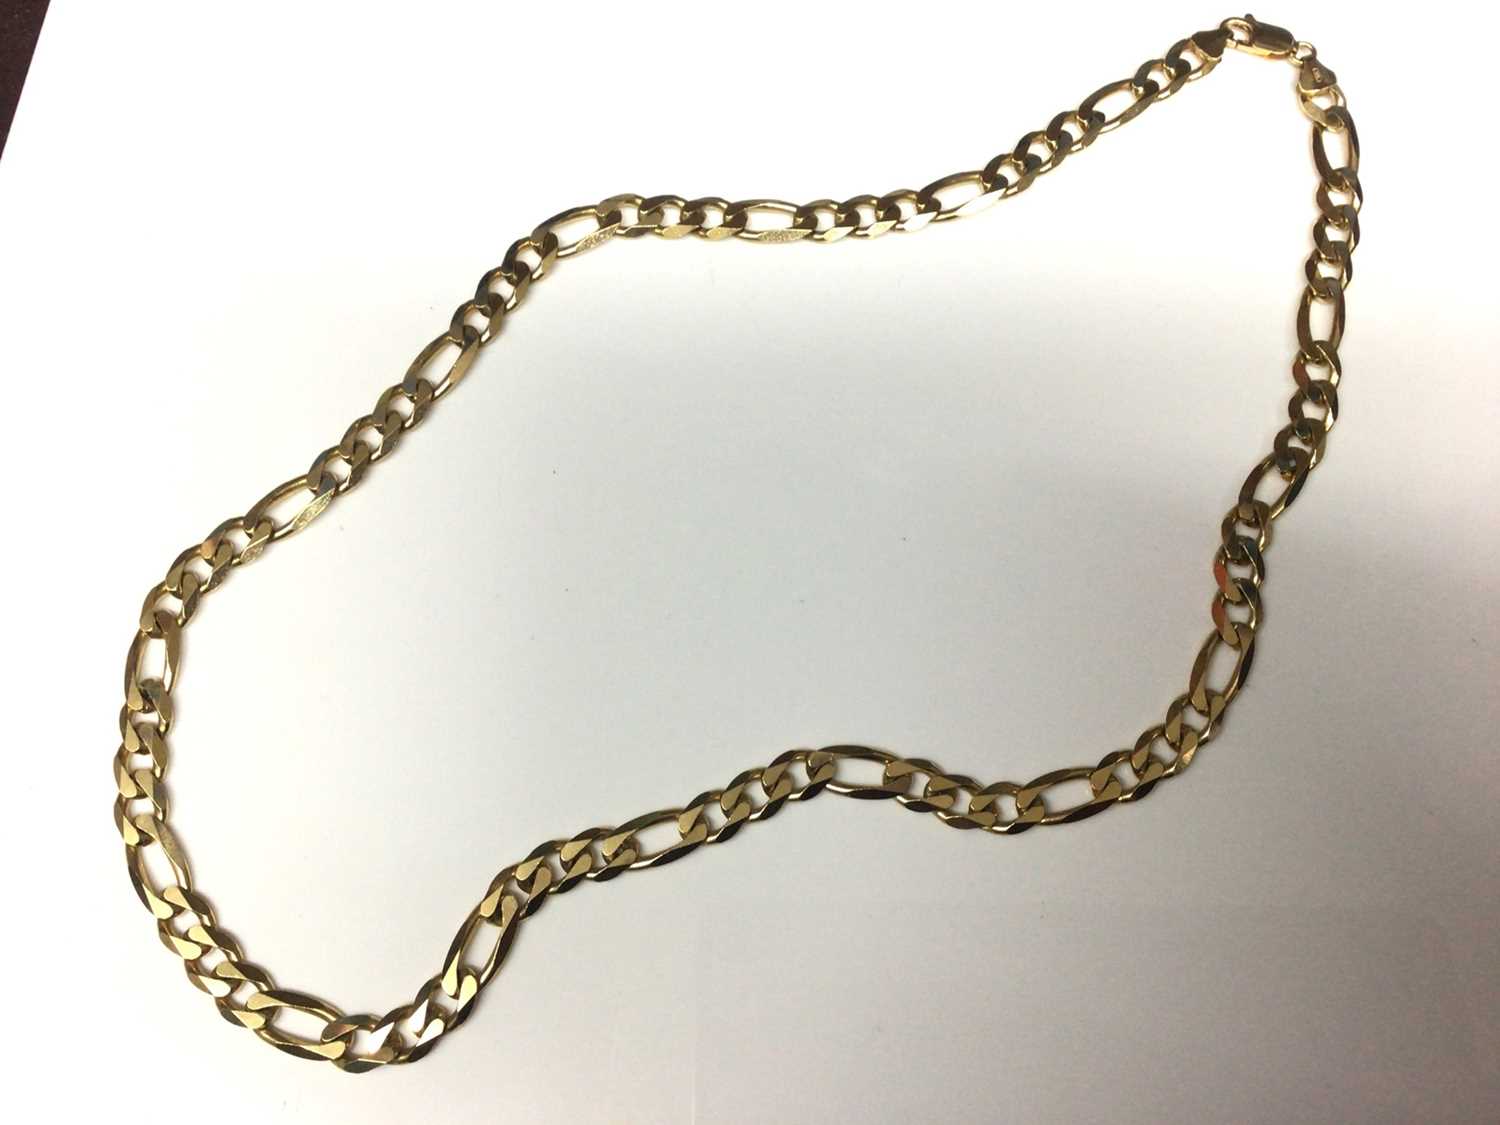 Lot 157 - 9ct gold flat curb link chain, 66cm long